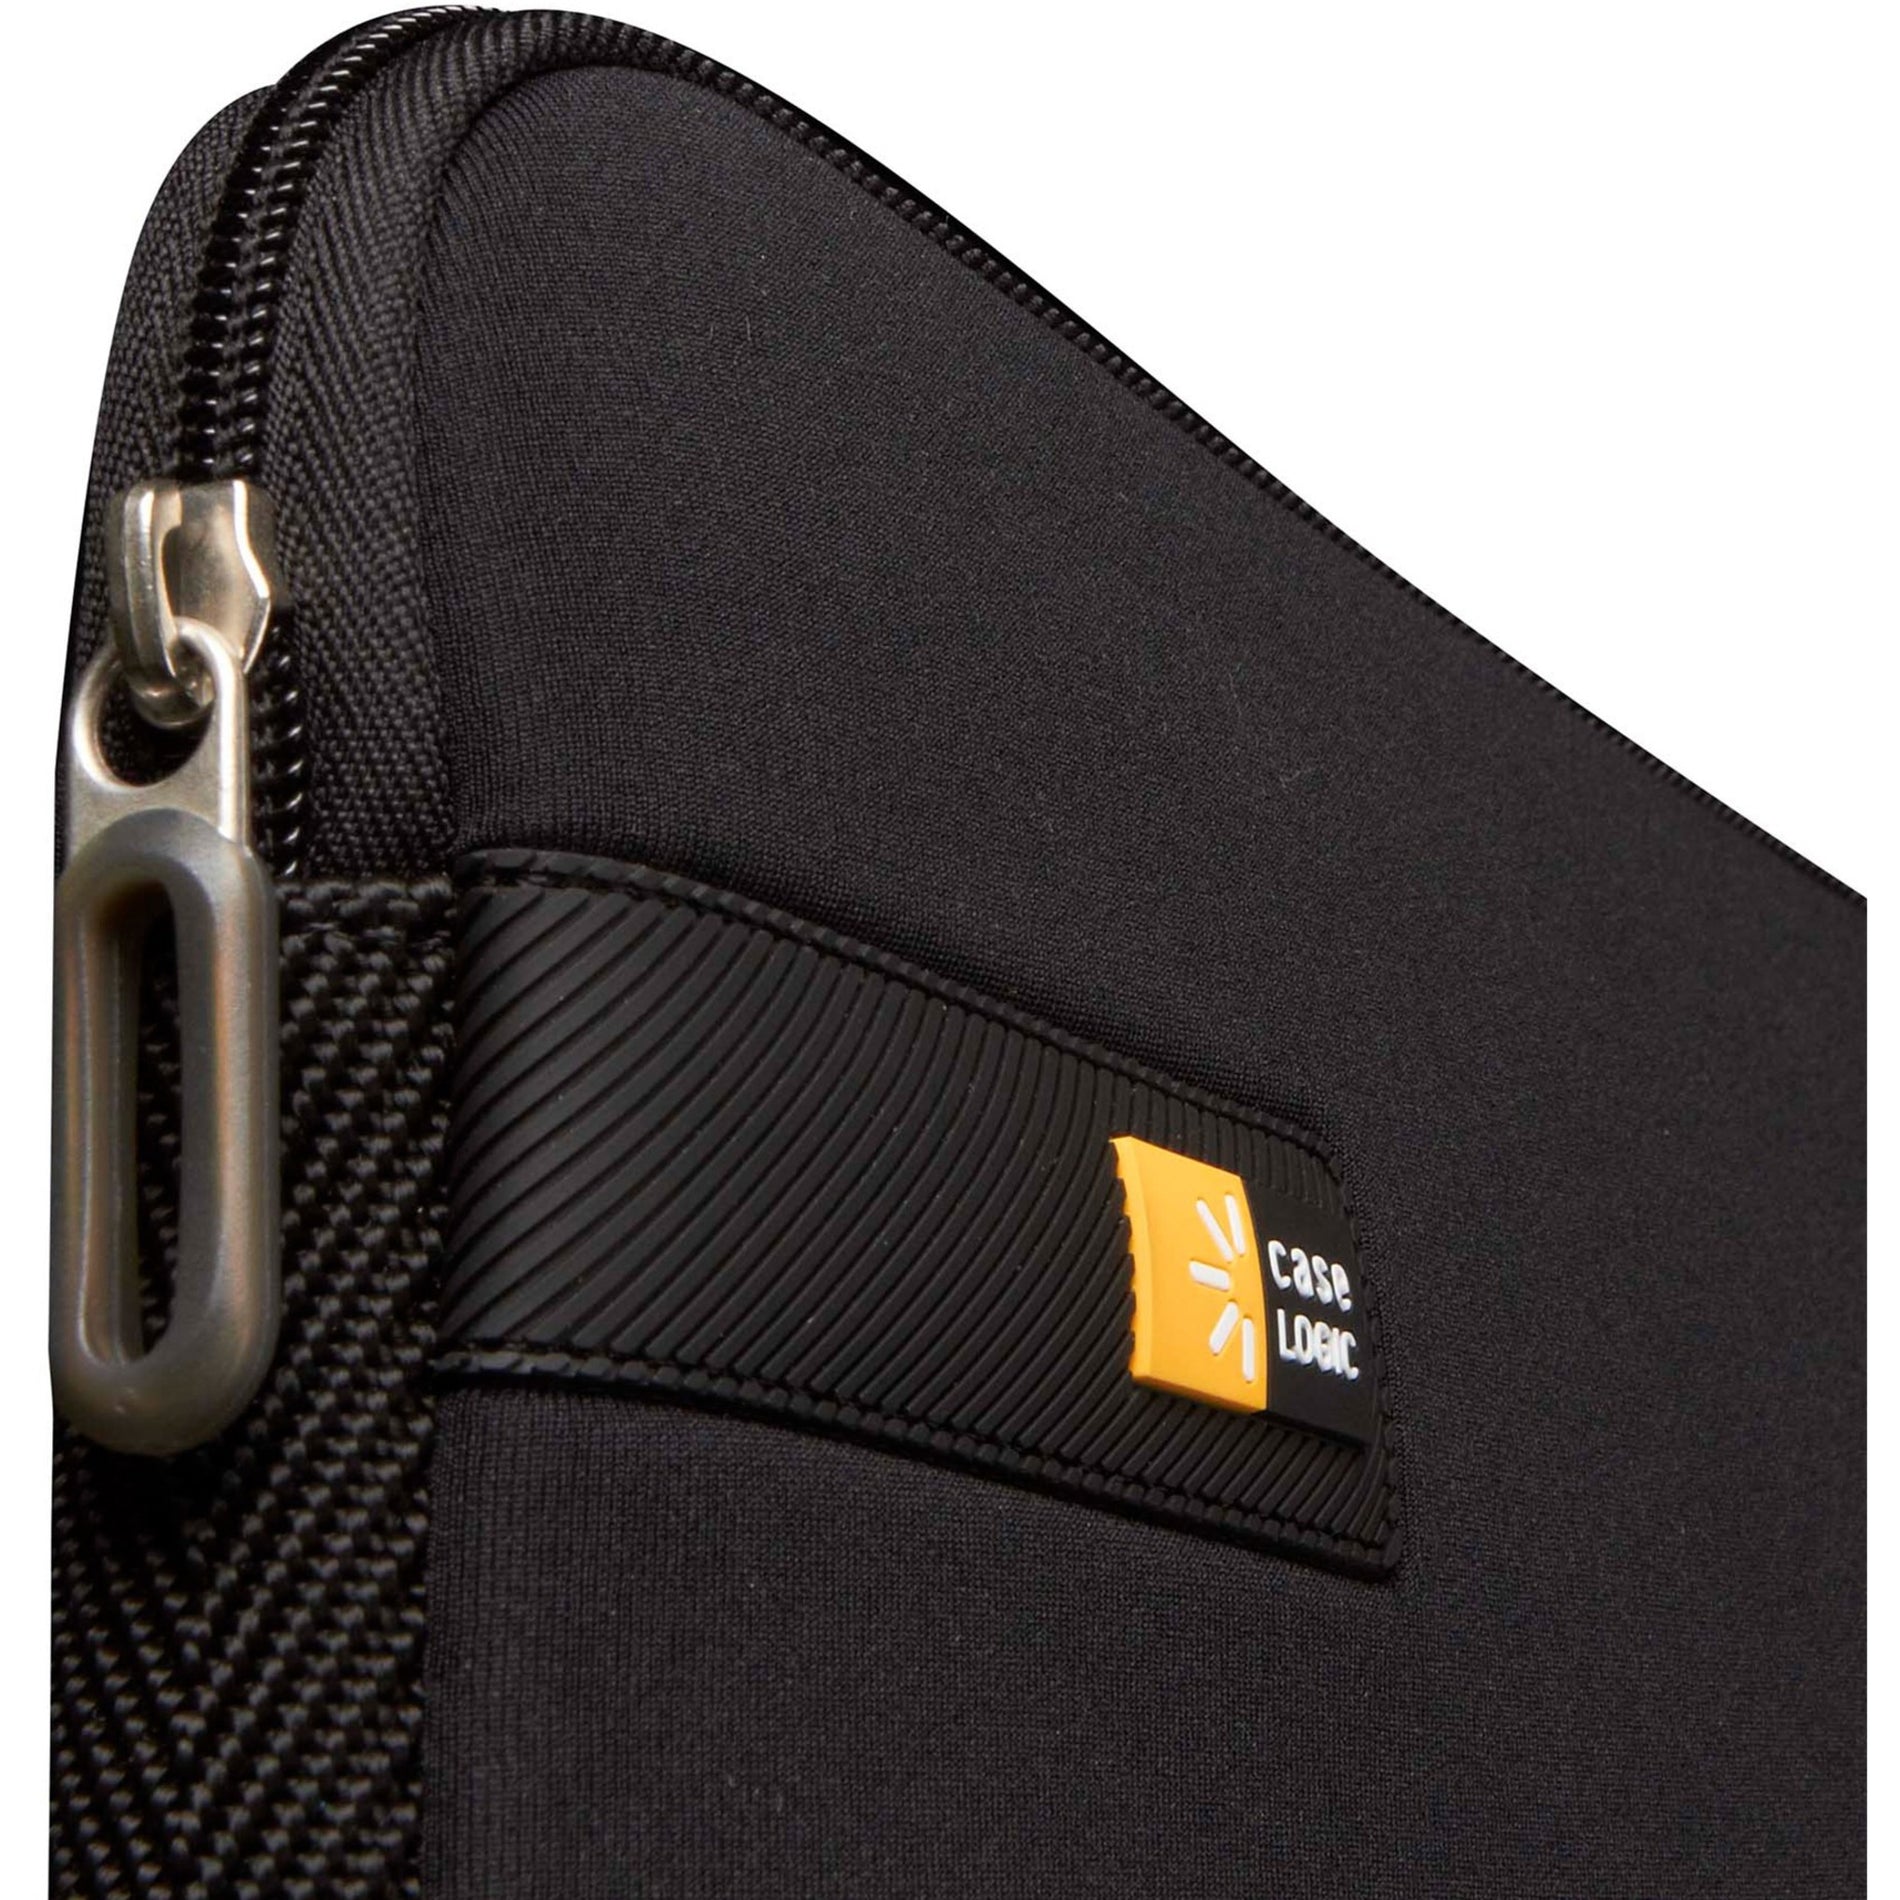 Case Logic 3201354 14" Laptop Sleeve Sleek and Protective Black Carrying Case Discontinued  Case Logic 3201354 14"笔记本电脑袋，时尚保护黑色手提箱 已停产